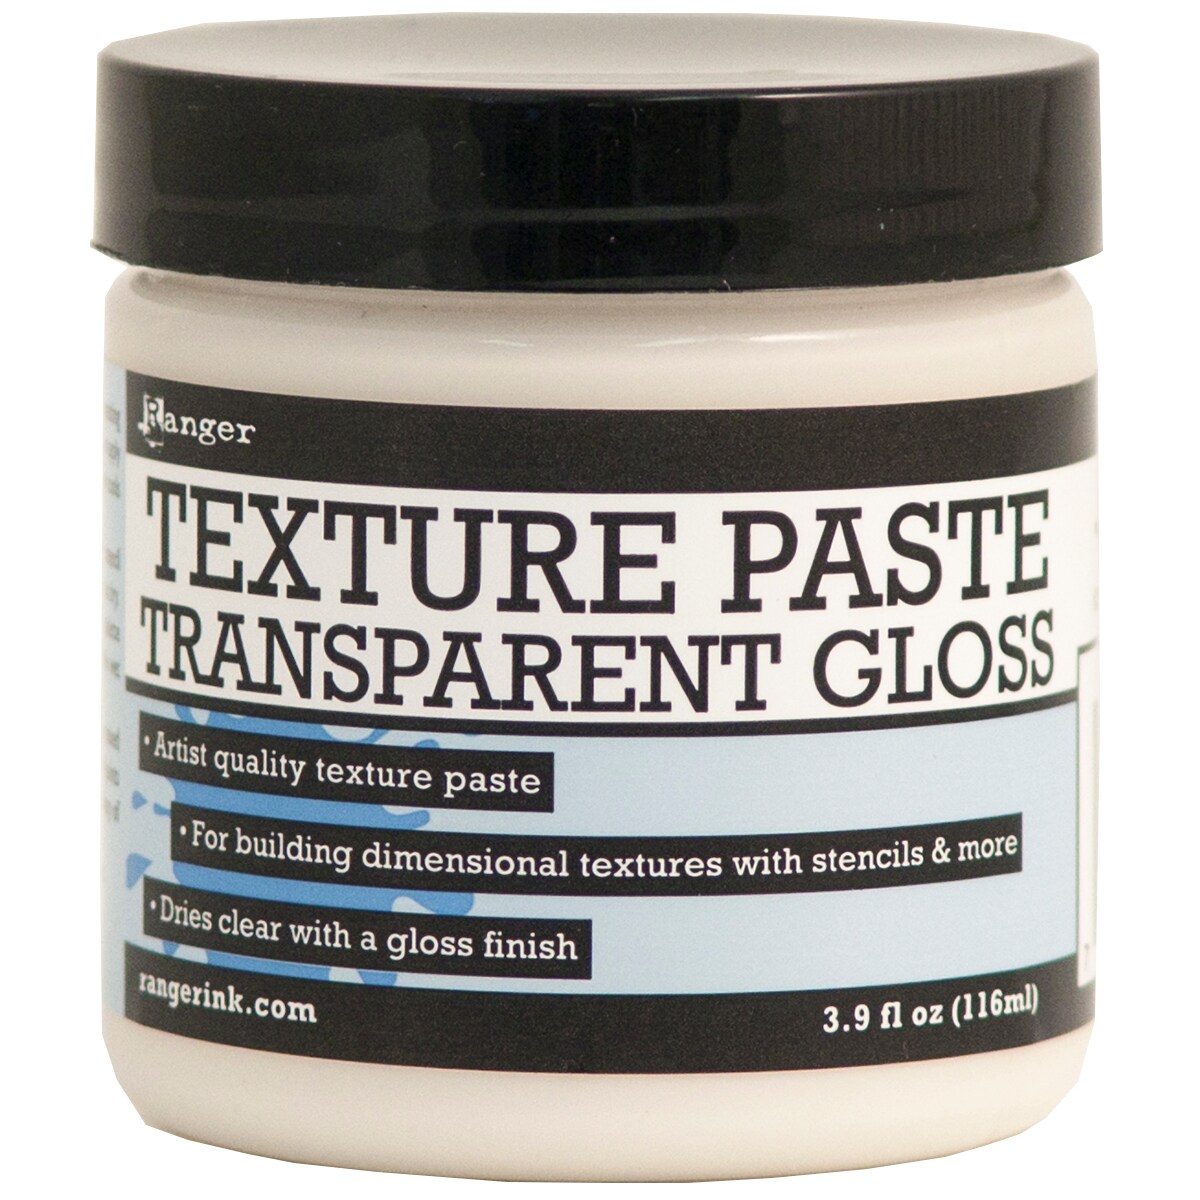 Ranger Texture Paste 4oz-Transparent Gloss